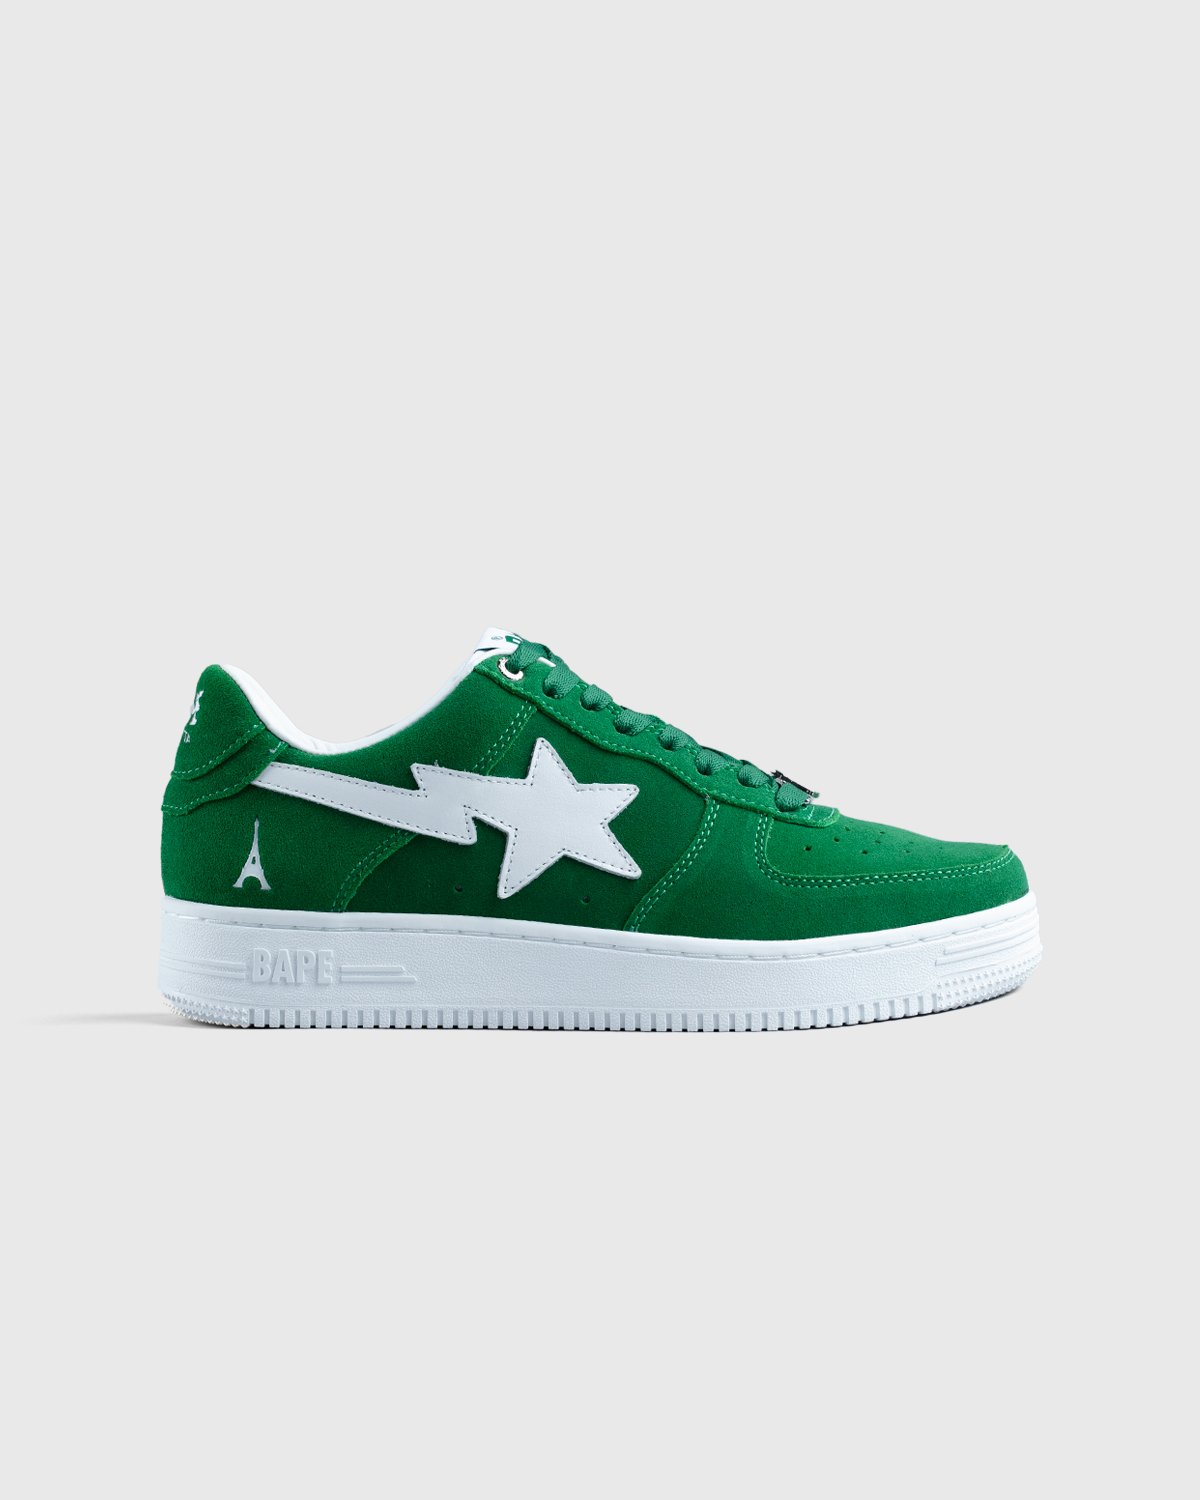 BAPE x Highsnobiety - BAPE STA Green - Footwear - Green - Image 1